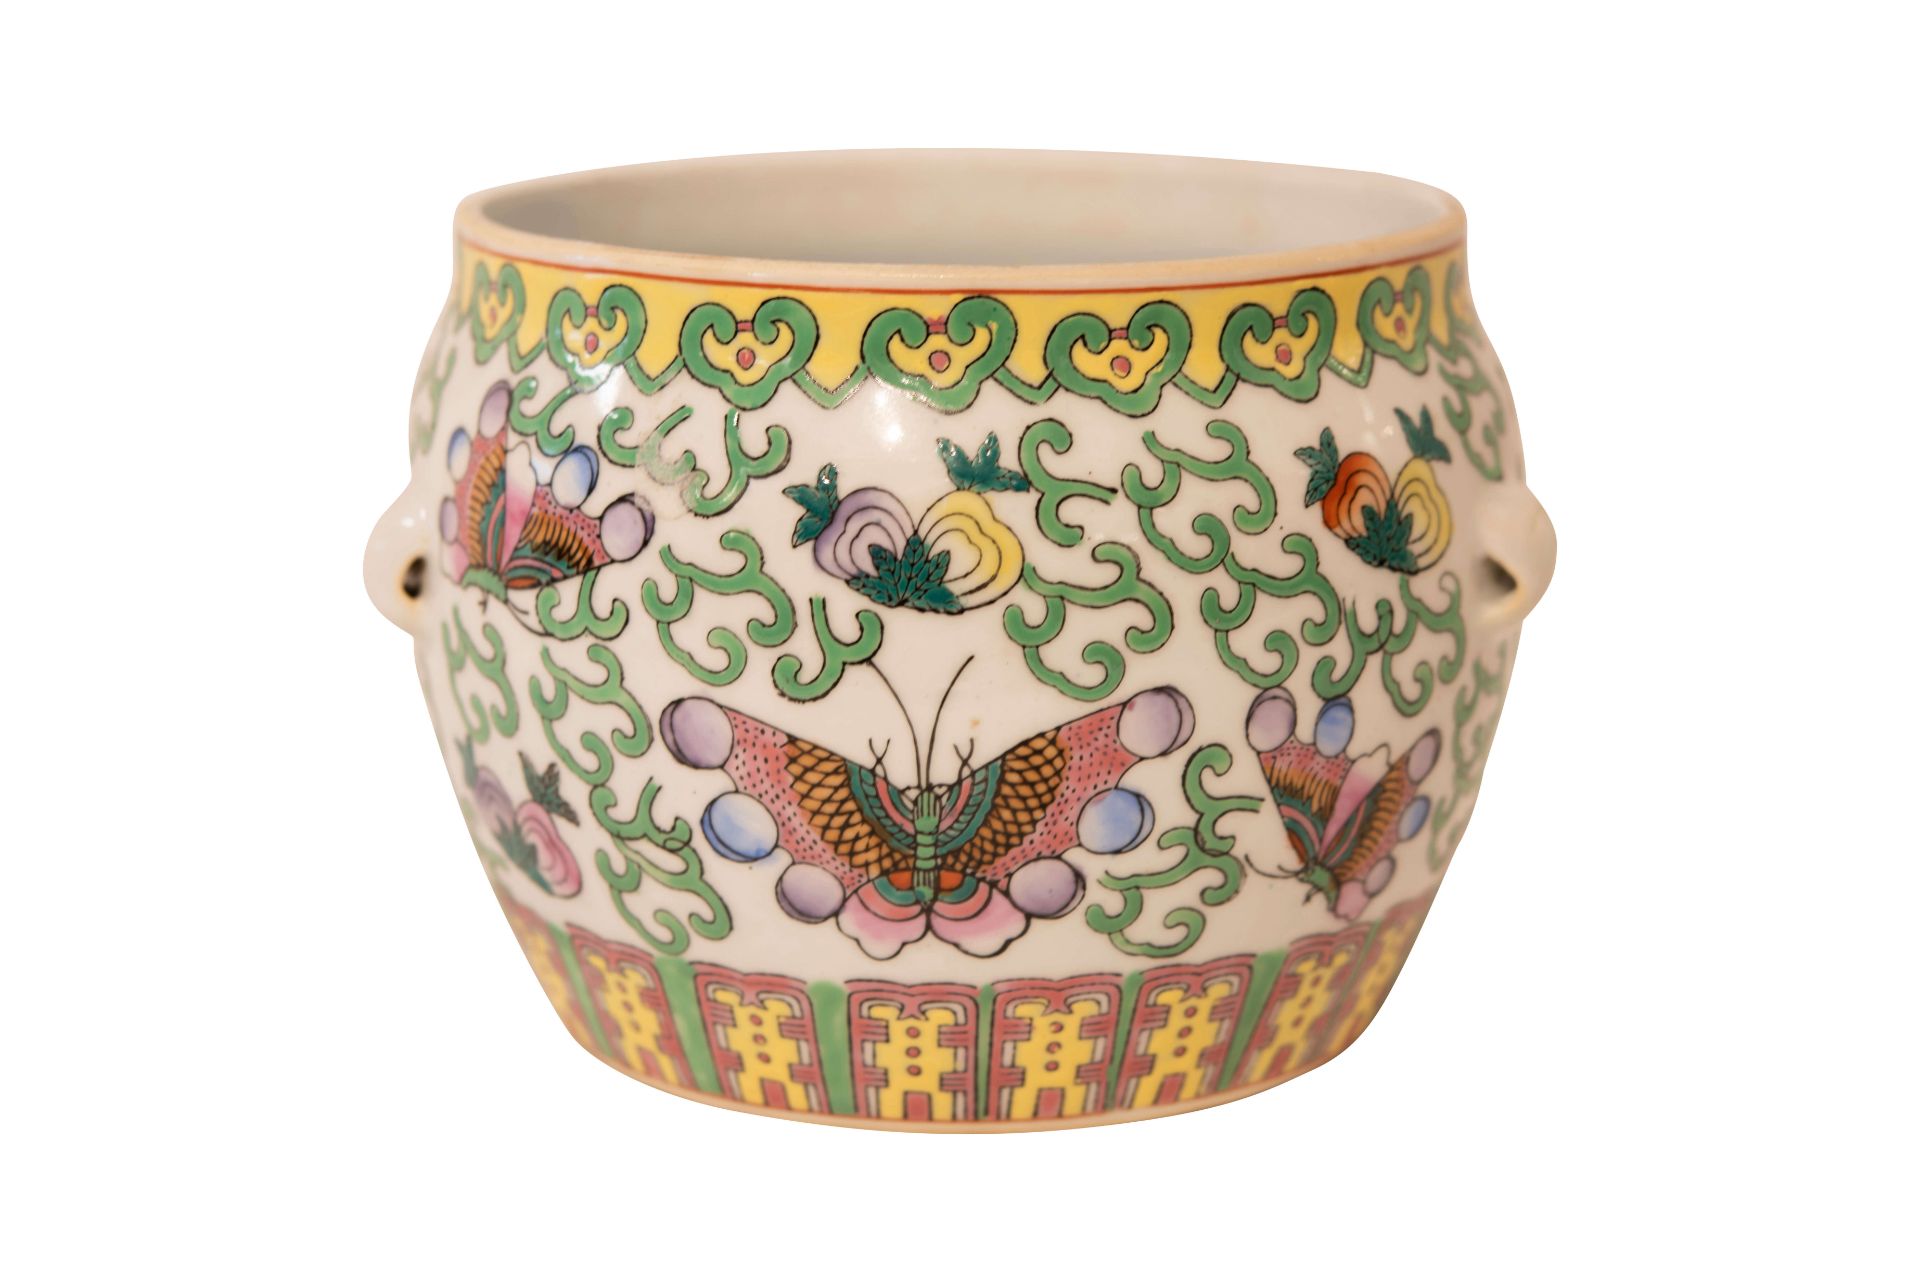 Handbemalter bunter Asiatischer Keramik Topf | Colorful Hand Painted Asian Ceramic Pot - Image 4 of 5